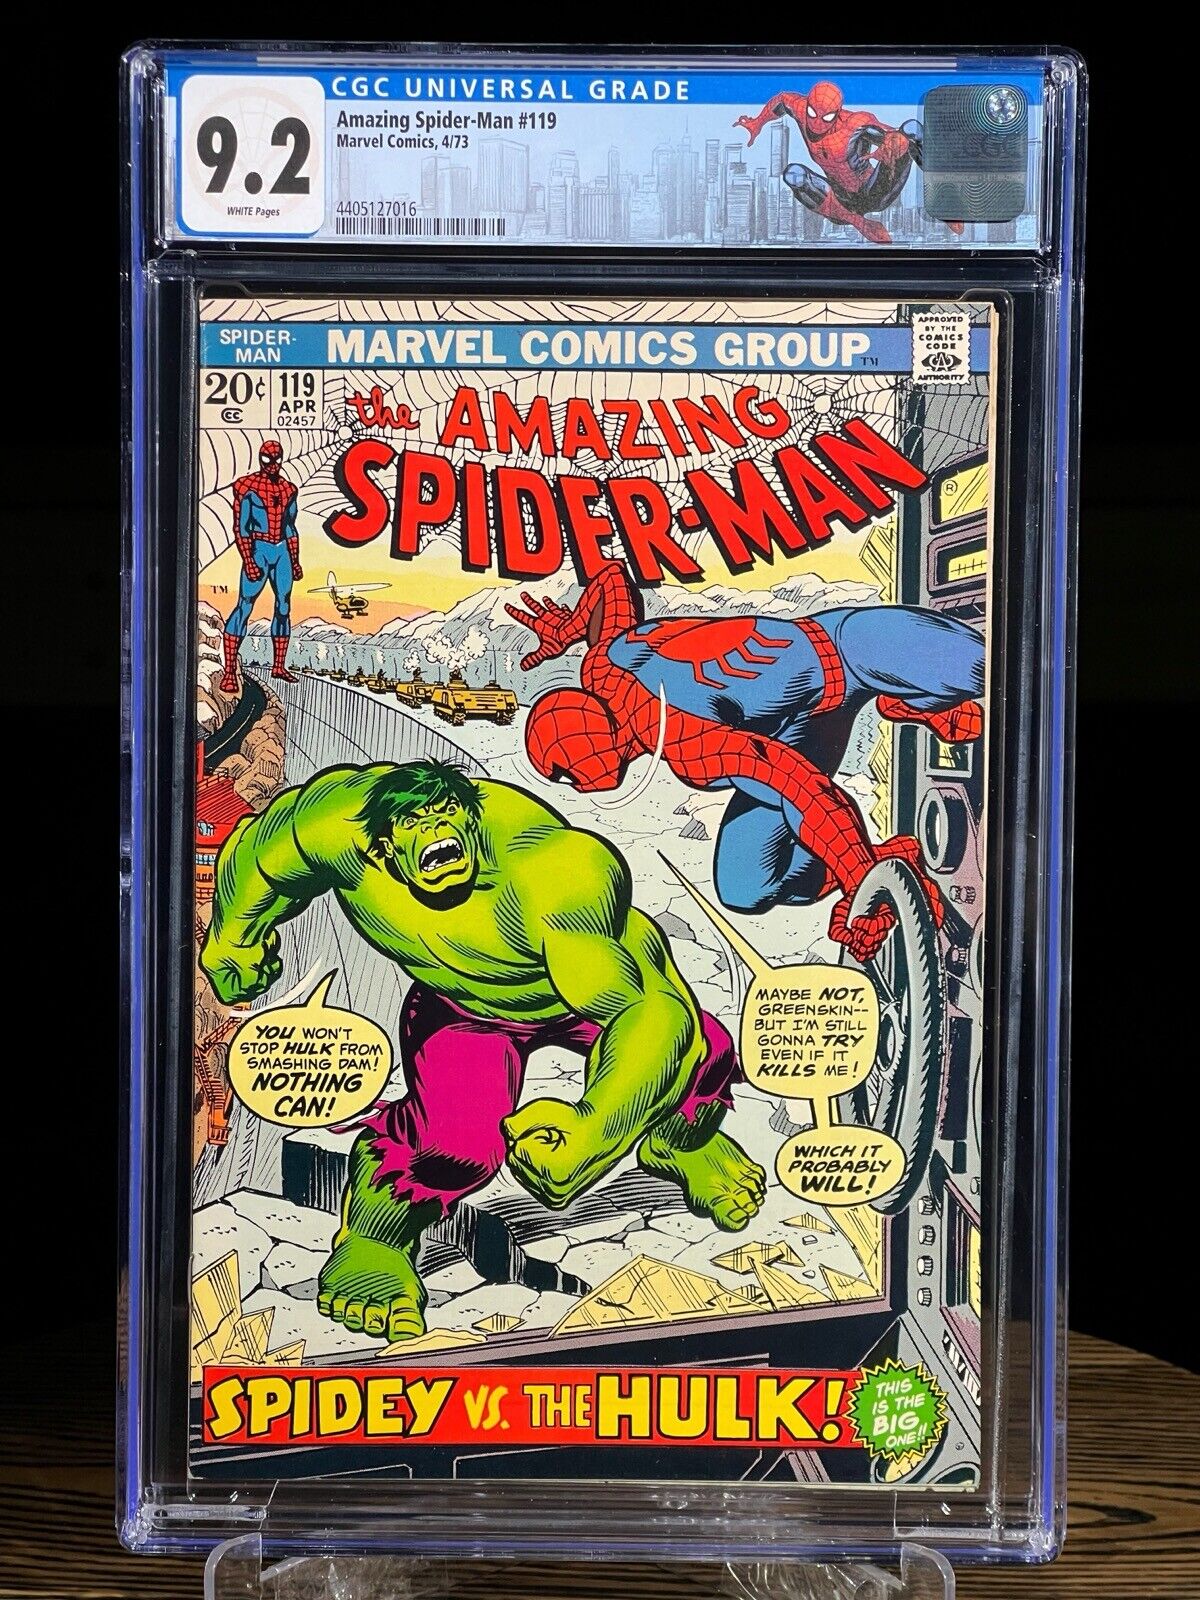 AMAZING SPIDER-MAN #119 April 1973 CGC 9.2 Hulk Battle KEY ISSUE